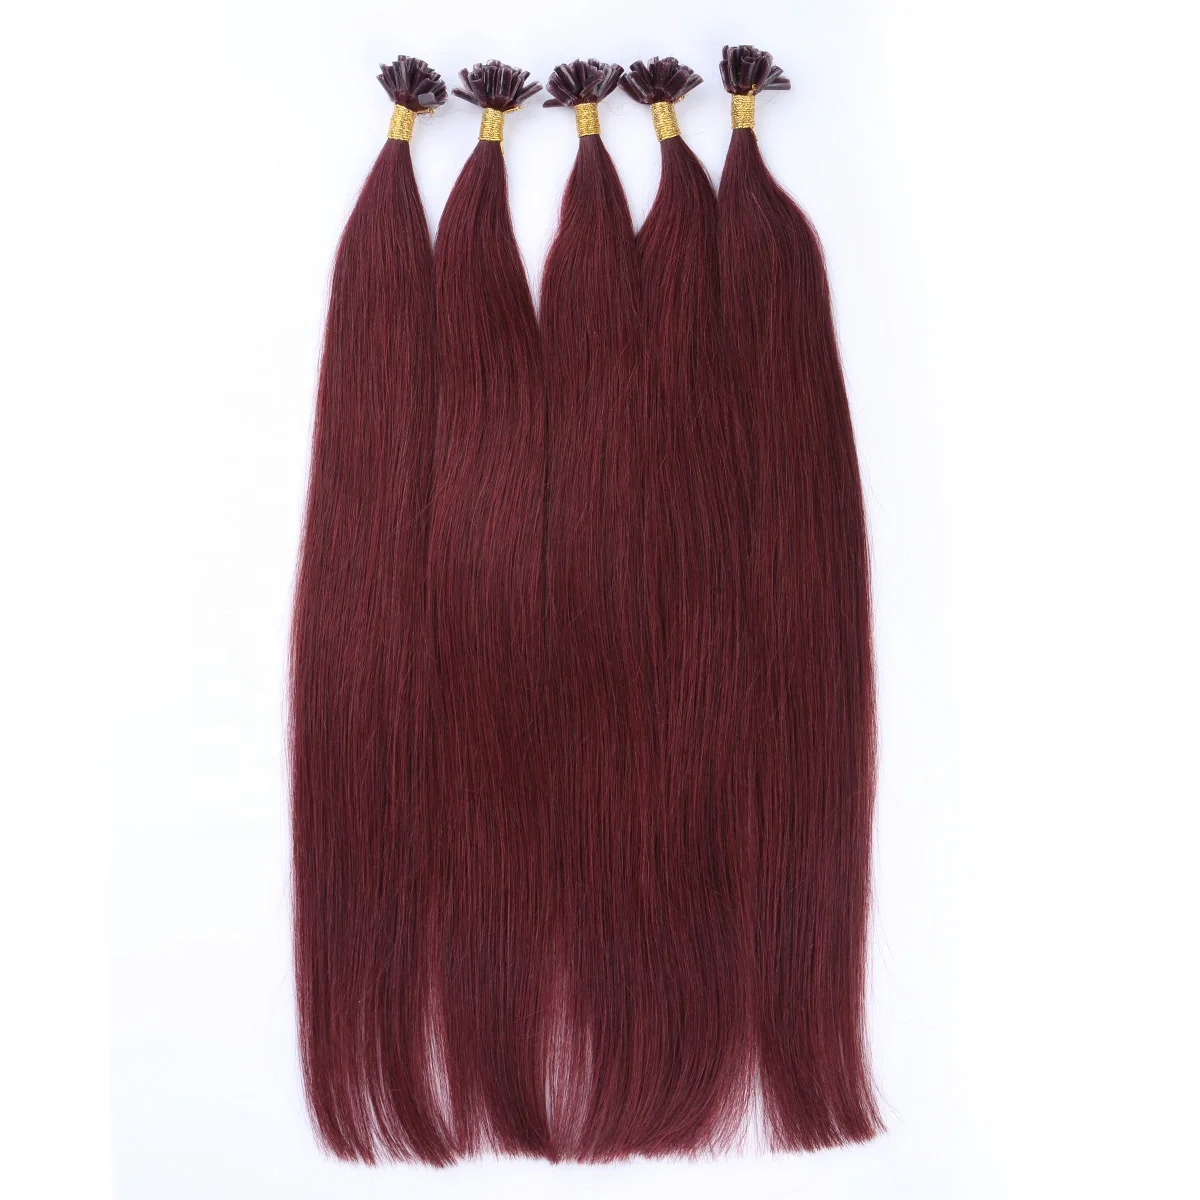 

10 to 18 Inch European Weft Weaven 100% Human Hair Extension Straight Virgin Hair Bundles, 3 colors like pic